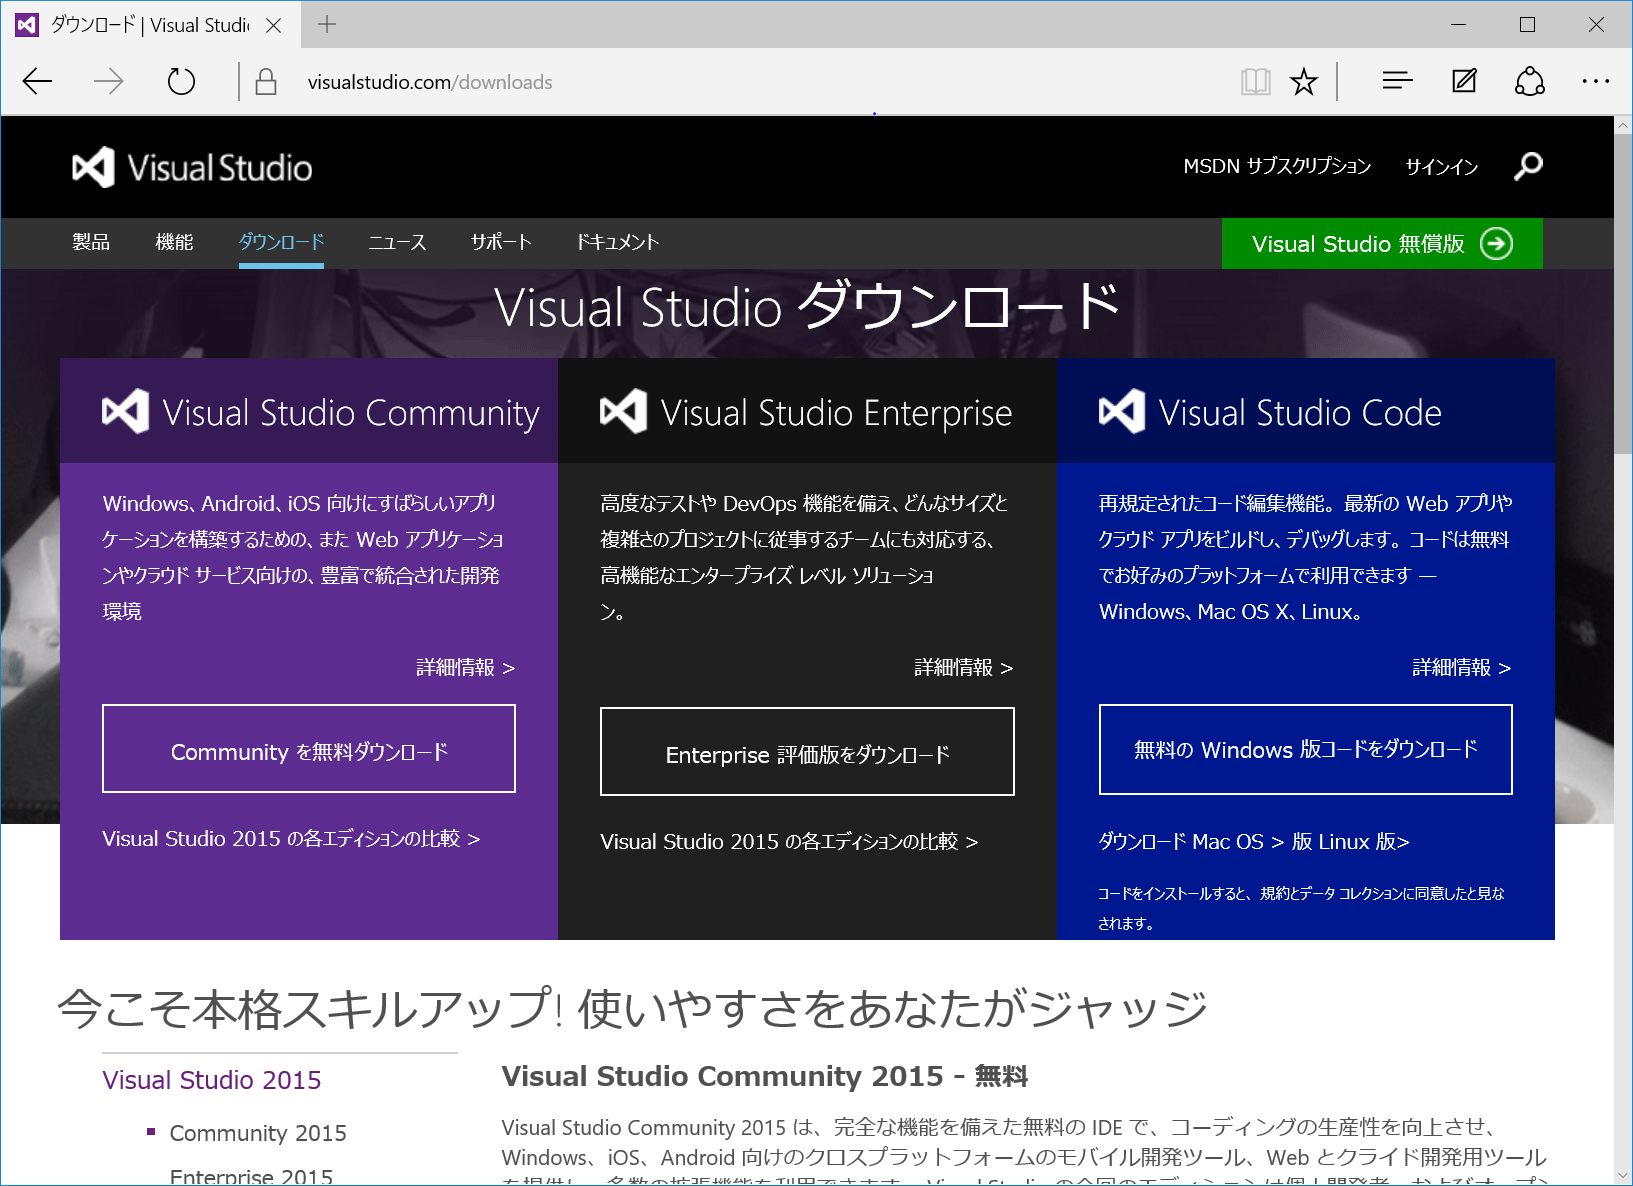 1@Visual Studio 2015ĉł́H